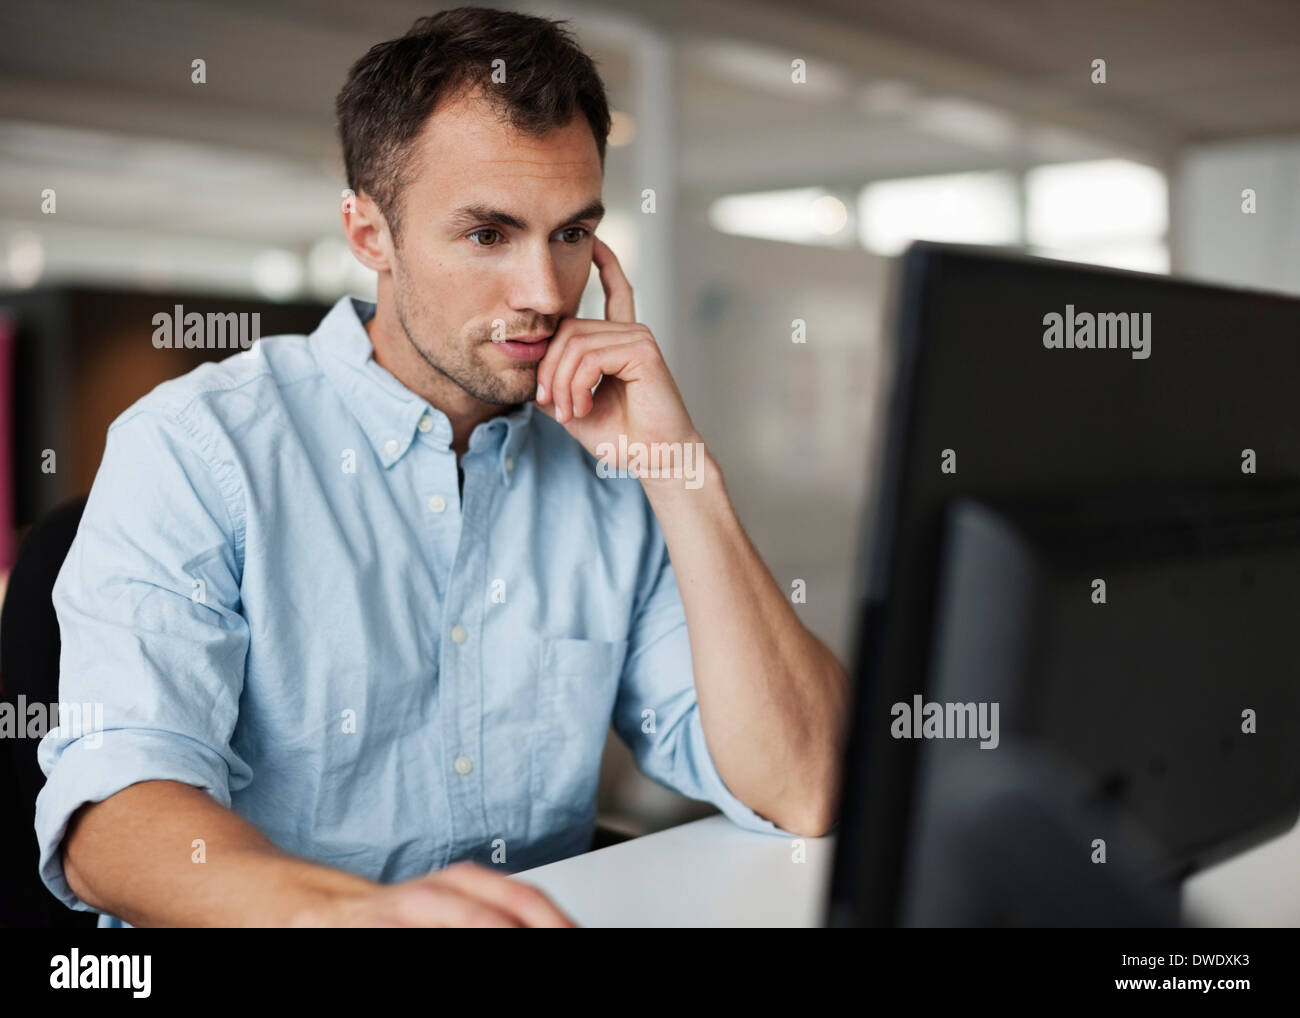 Businessman using desktop PC at desk in office Banque D'Images